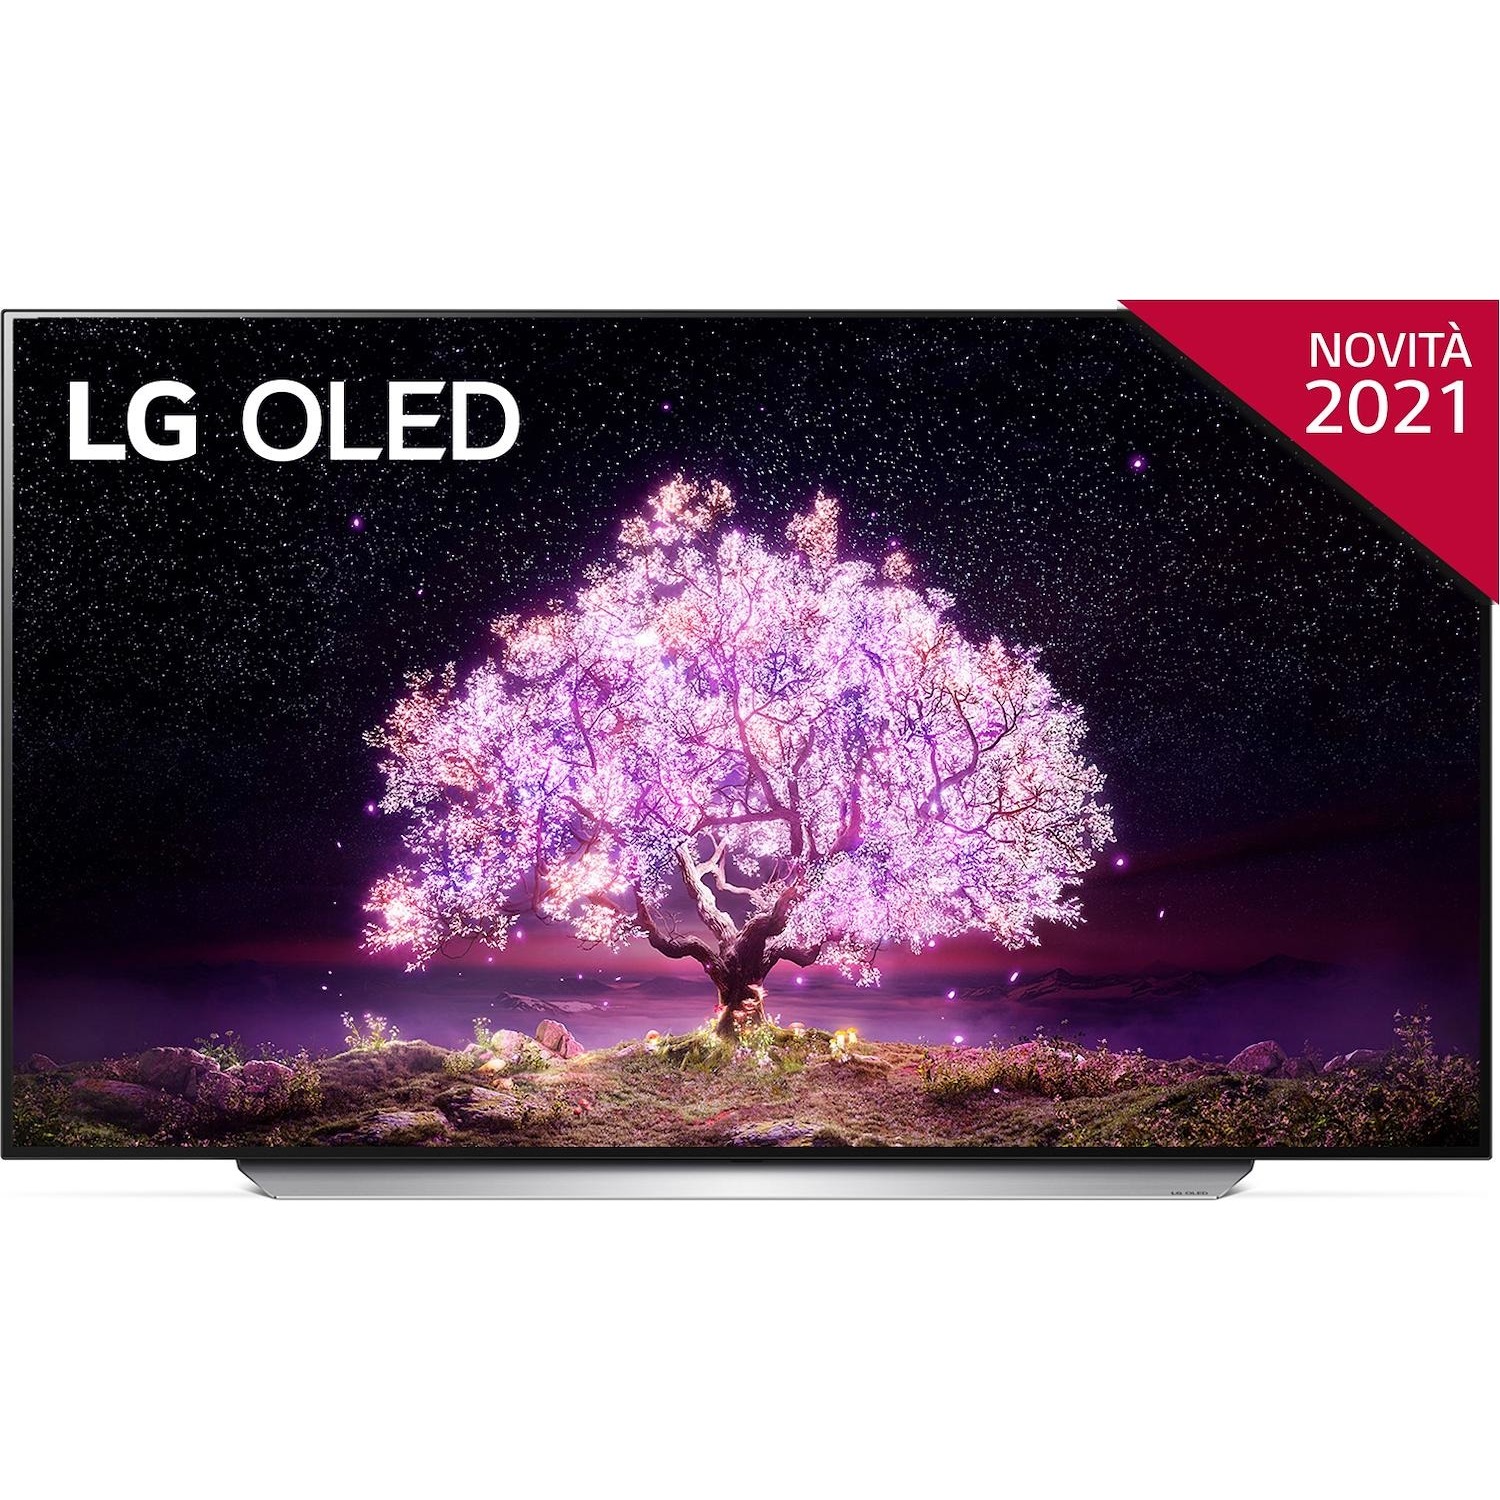 Immagine per TV OLED UHD 4K Smart LG OLED65C16 da DIMOStore